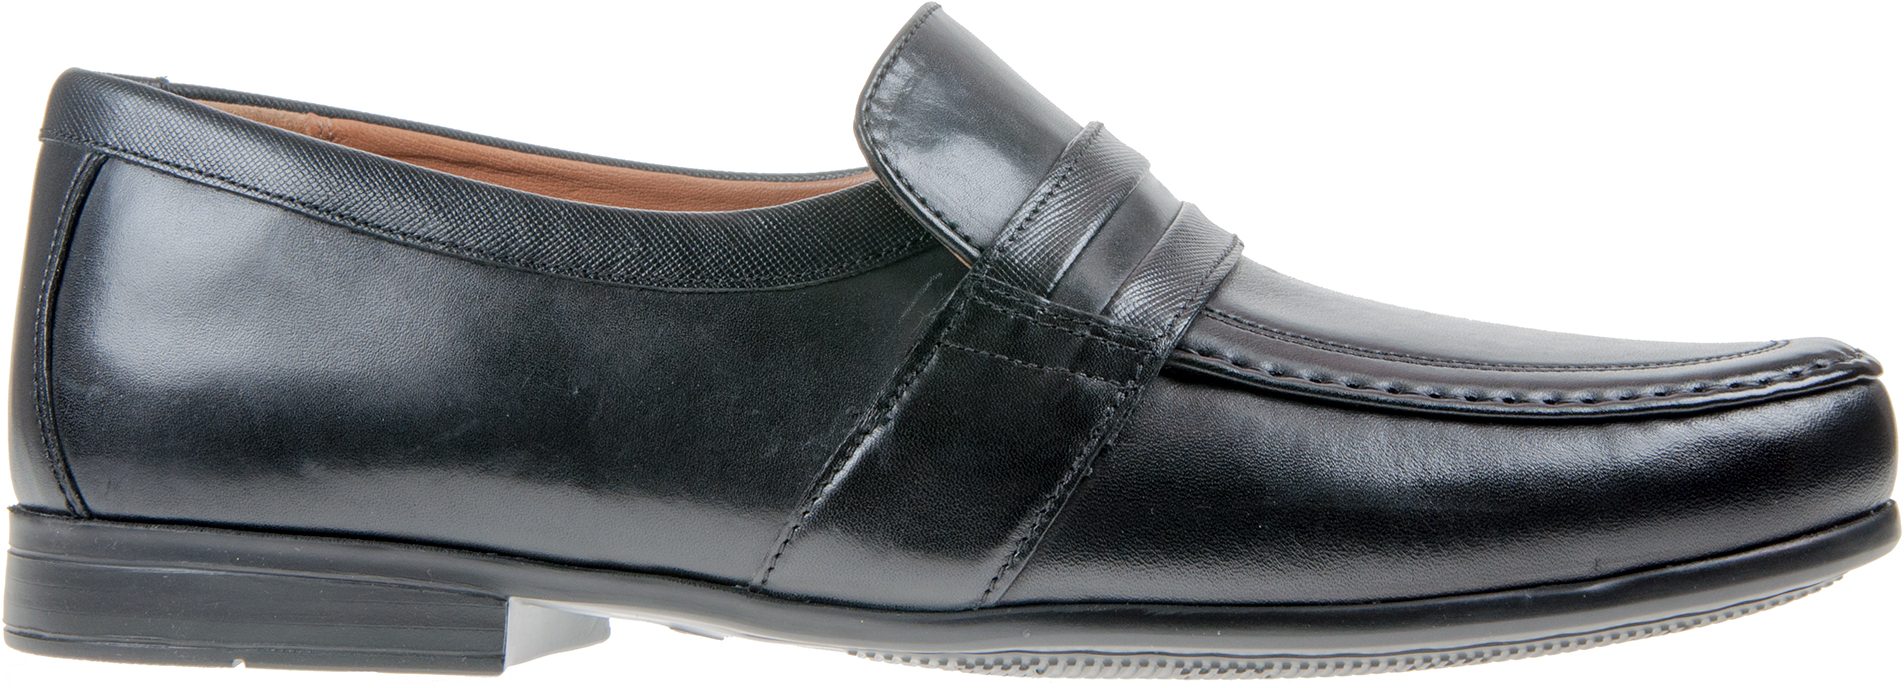 Clarks Claude Aston Black 26124130 - Formal Shoes - Humphries Shoes